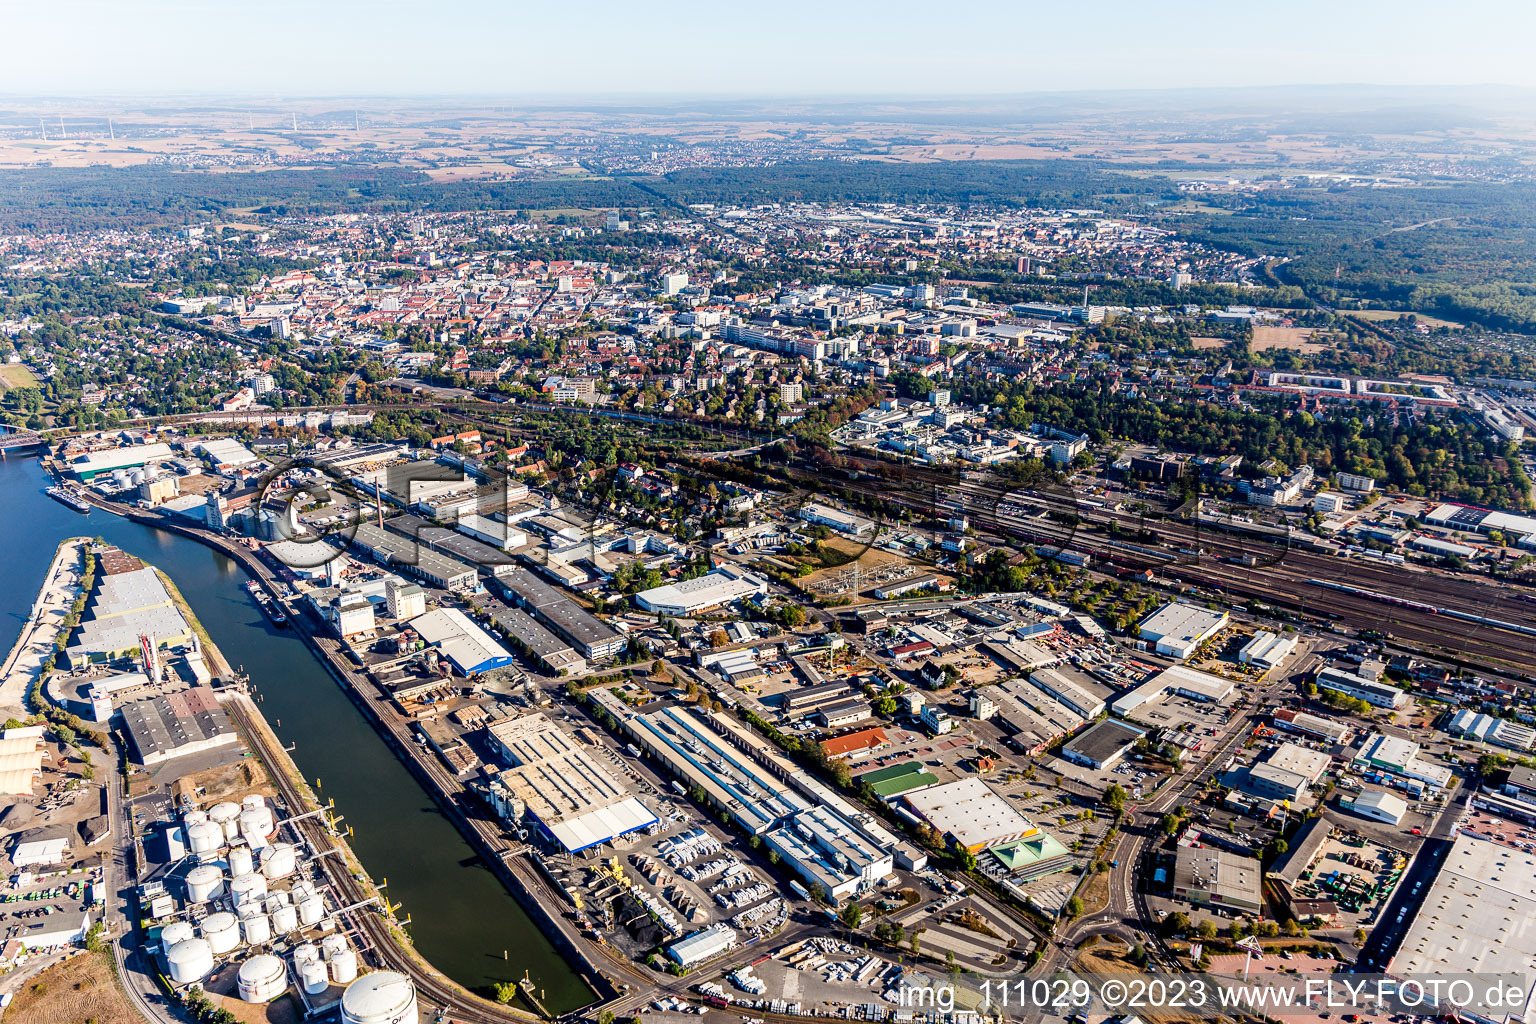 Aerial view of Harbor in Hanau in the state Hesse, Germany